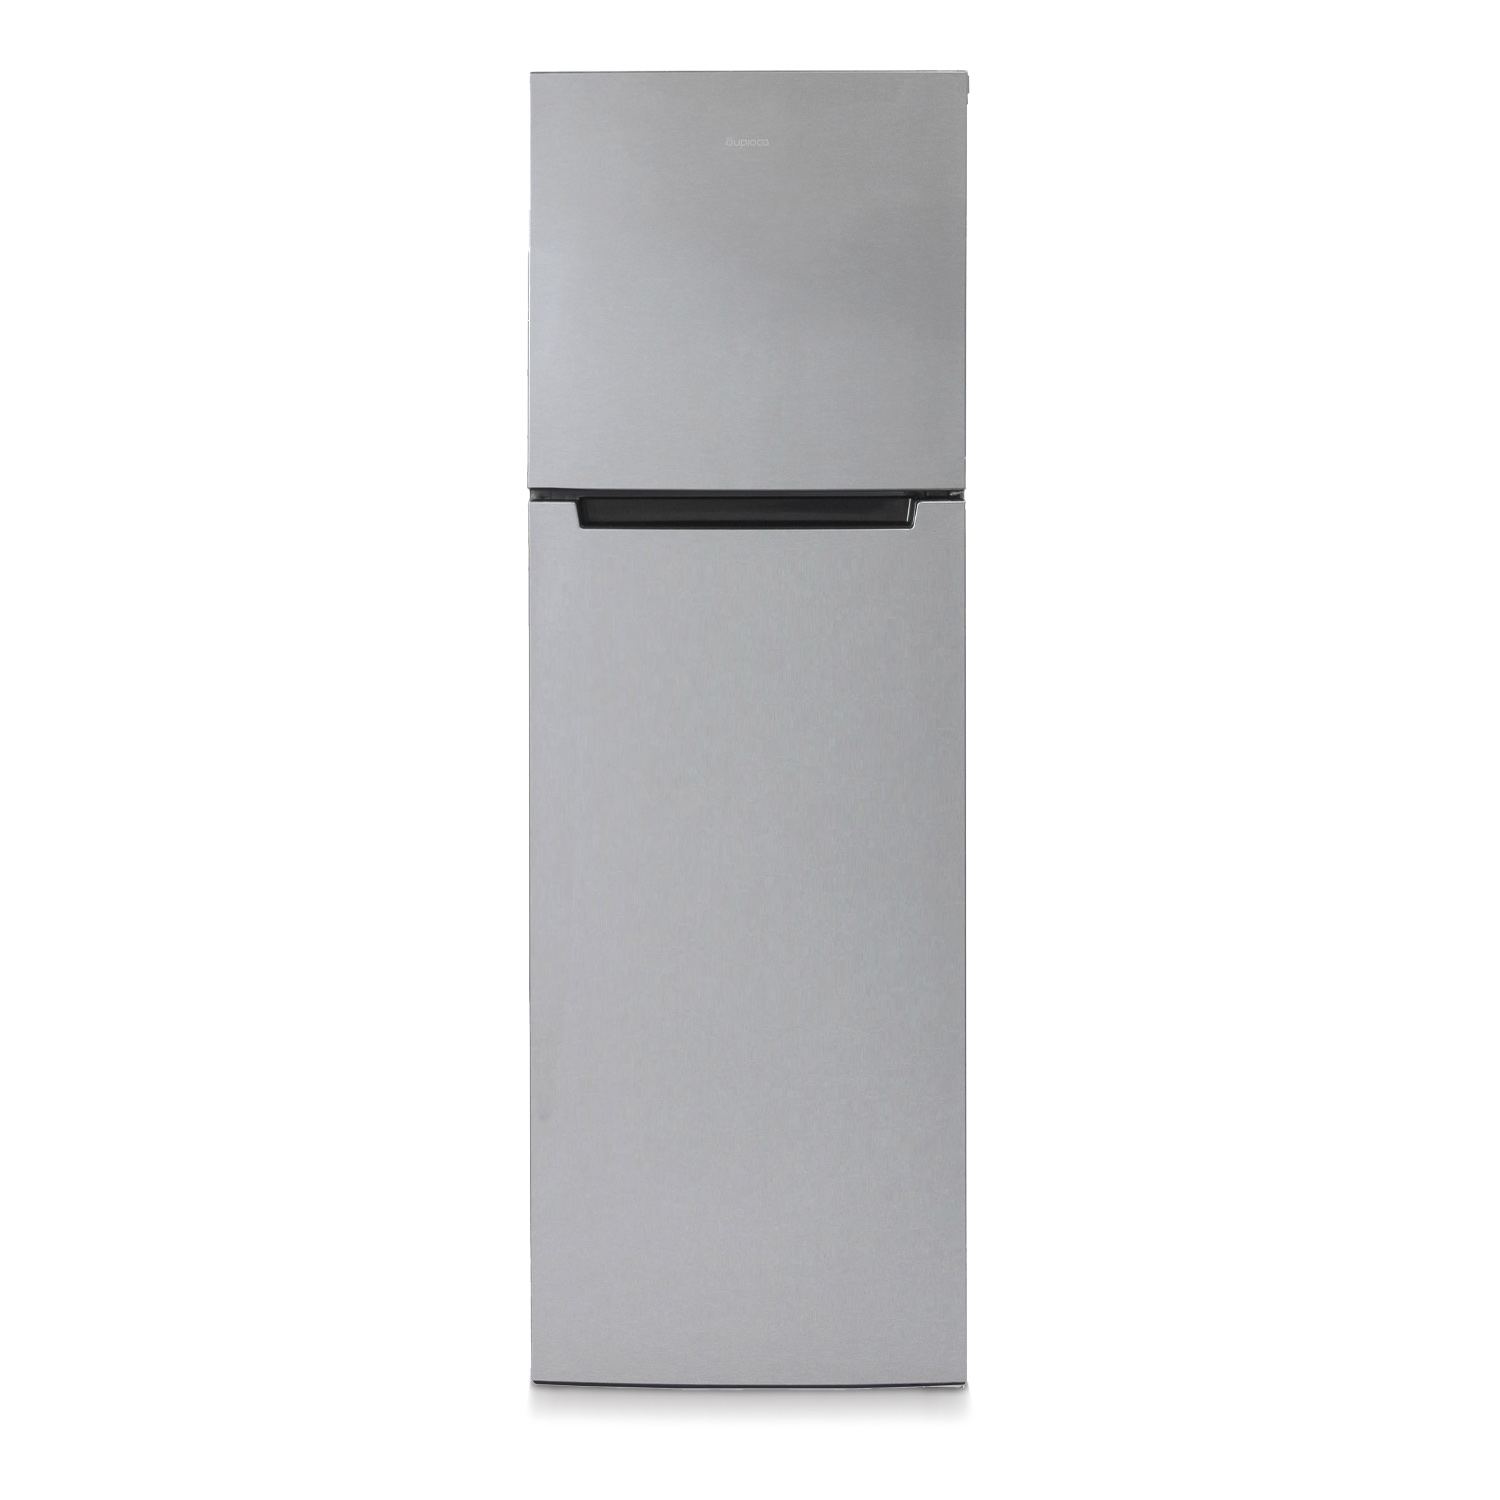 Холодильник Бирюса C6039 серебристый холодильник бирюса б m153 серебристый